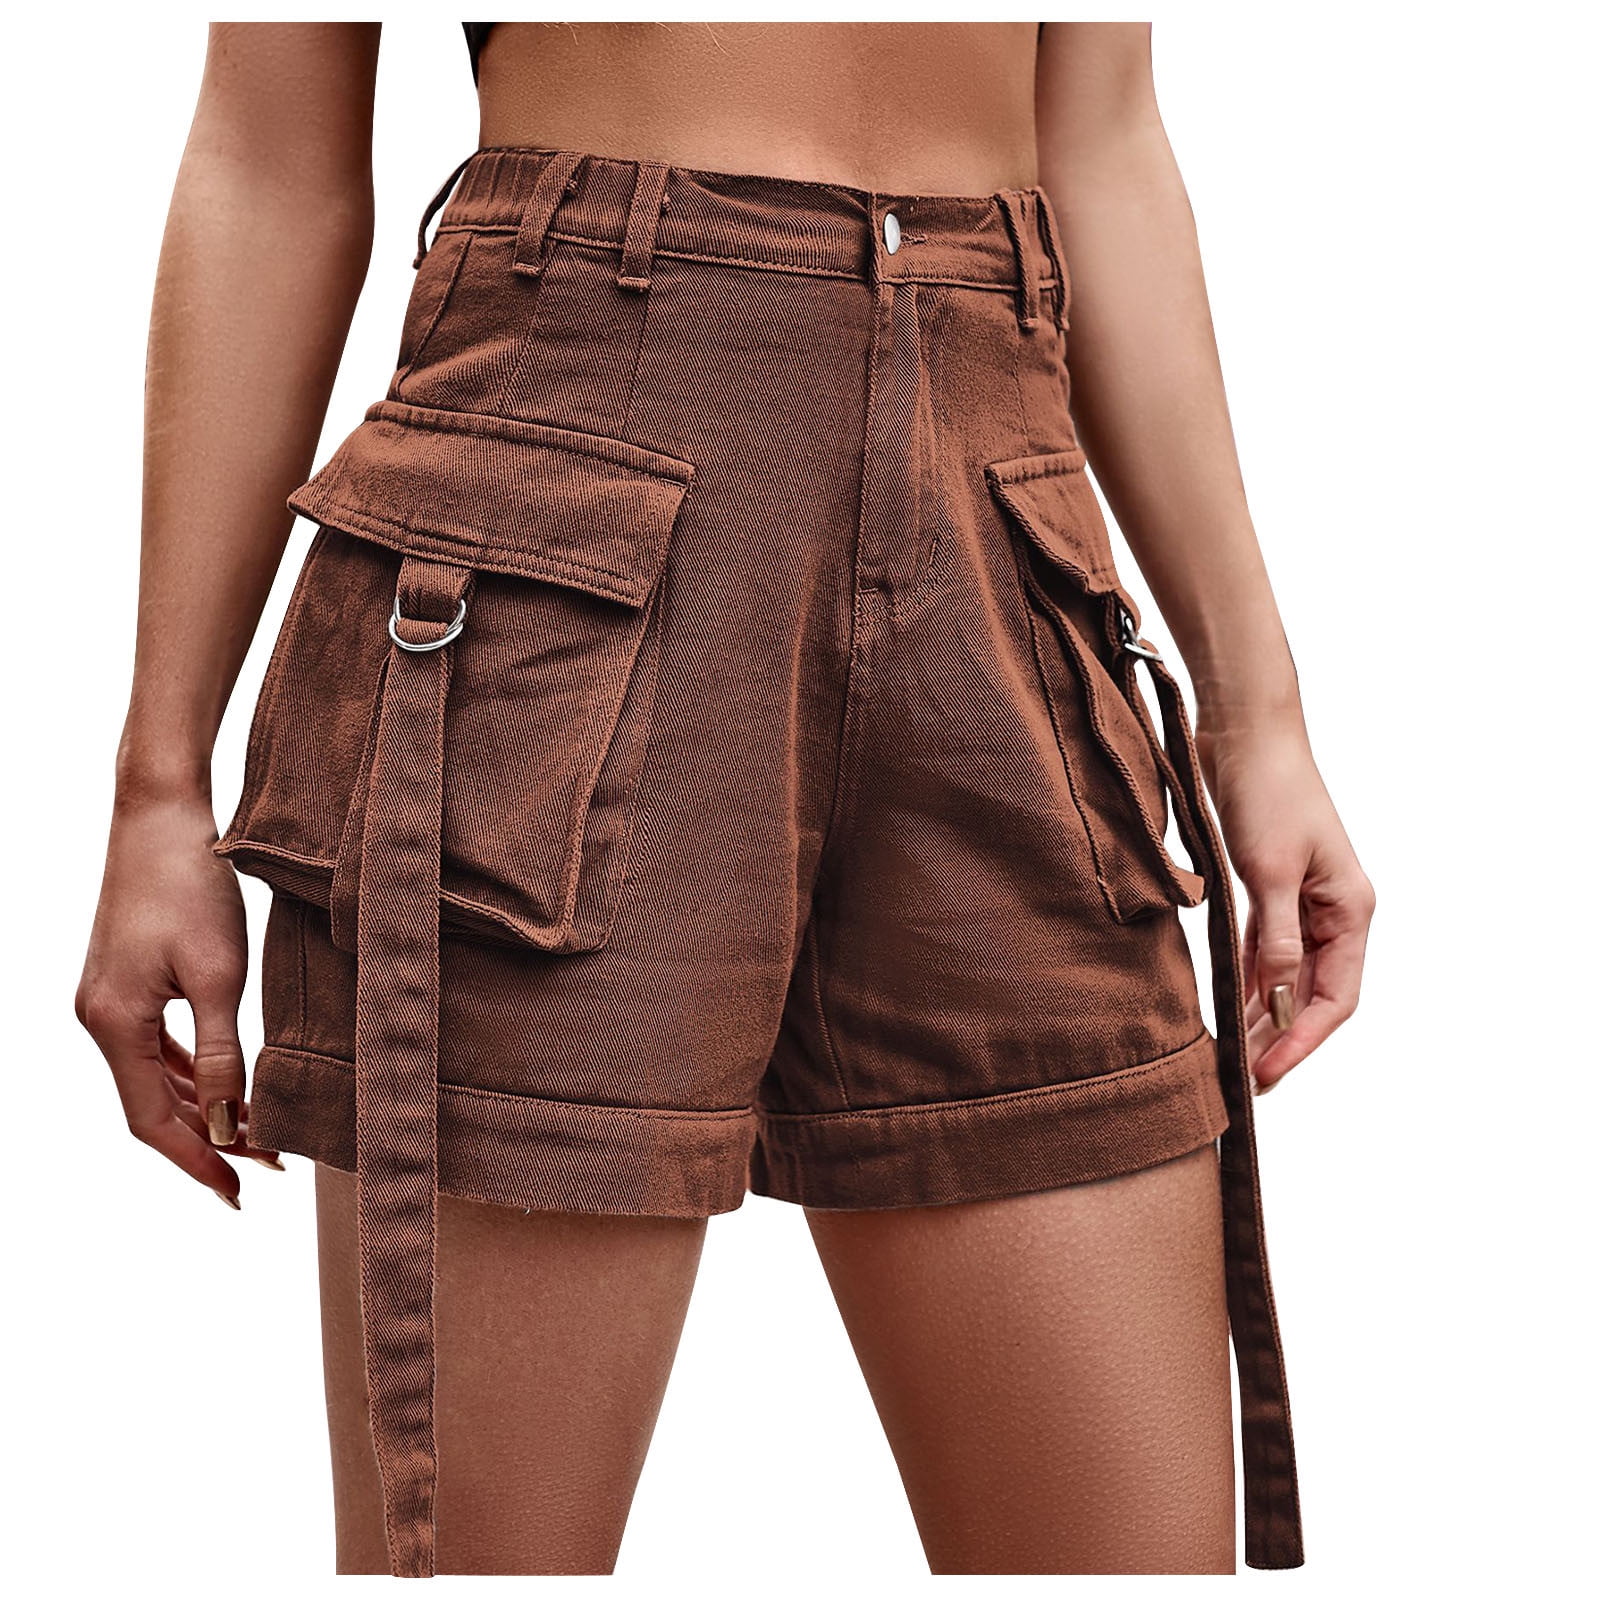 Brown shorts for women - Active shape wear - 2 back pockets - Belore Slims